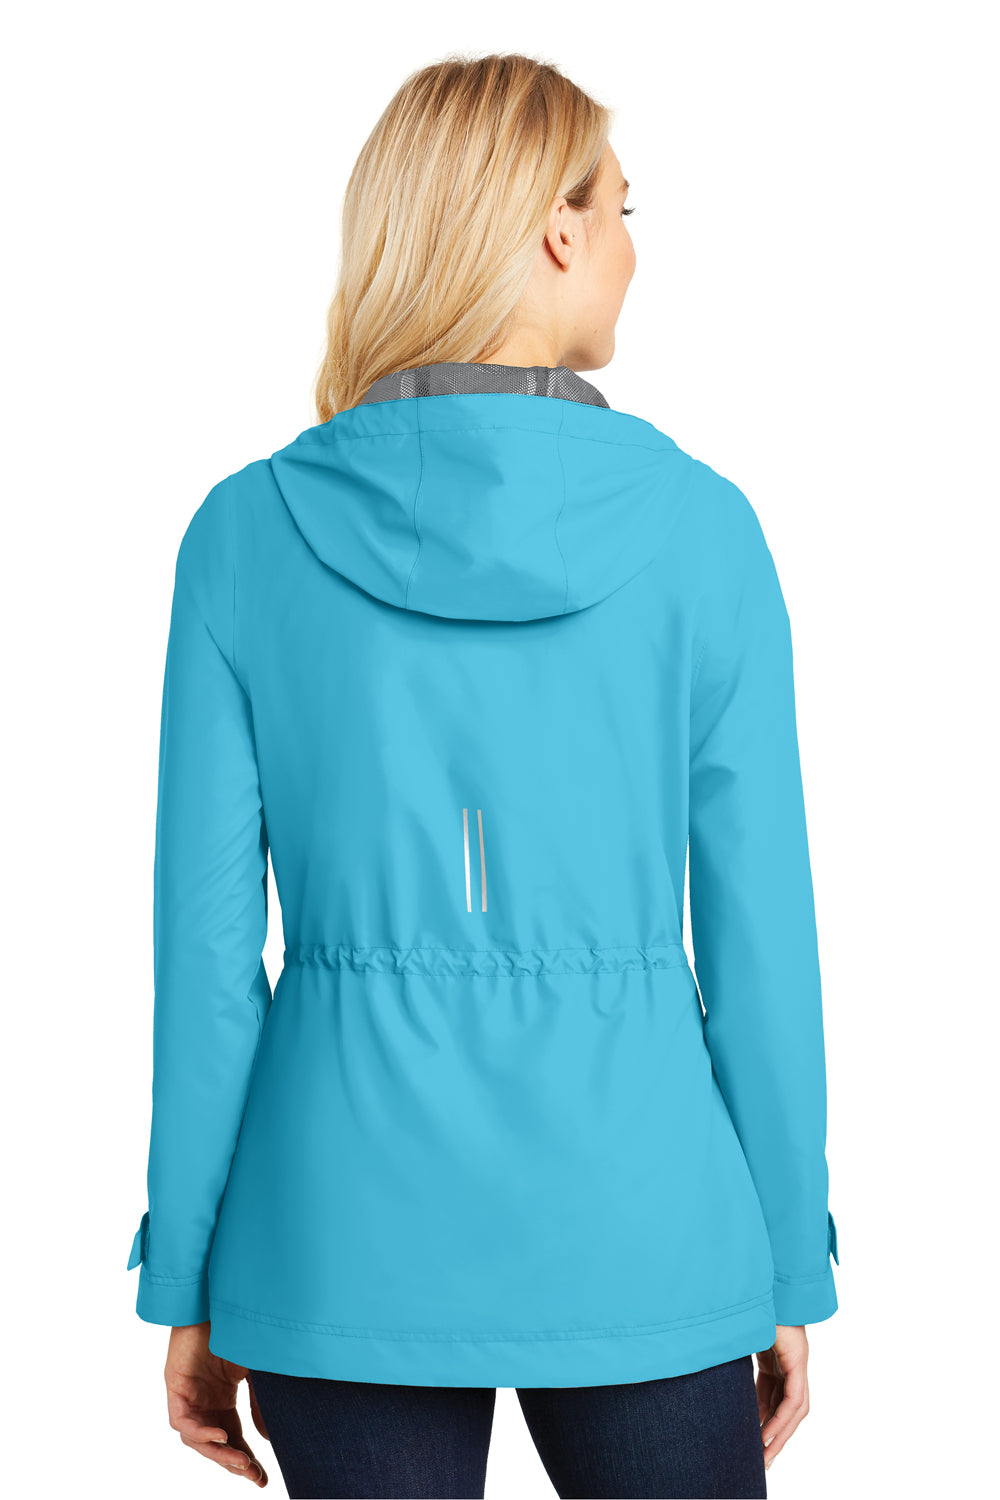 Port Authority L7710 Womens Northwest Slicker Waterproof Full Zip Hooded Jacket Isla Blue Back